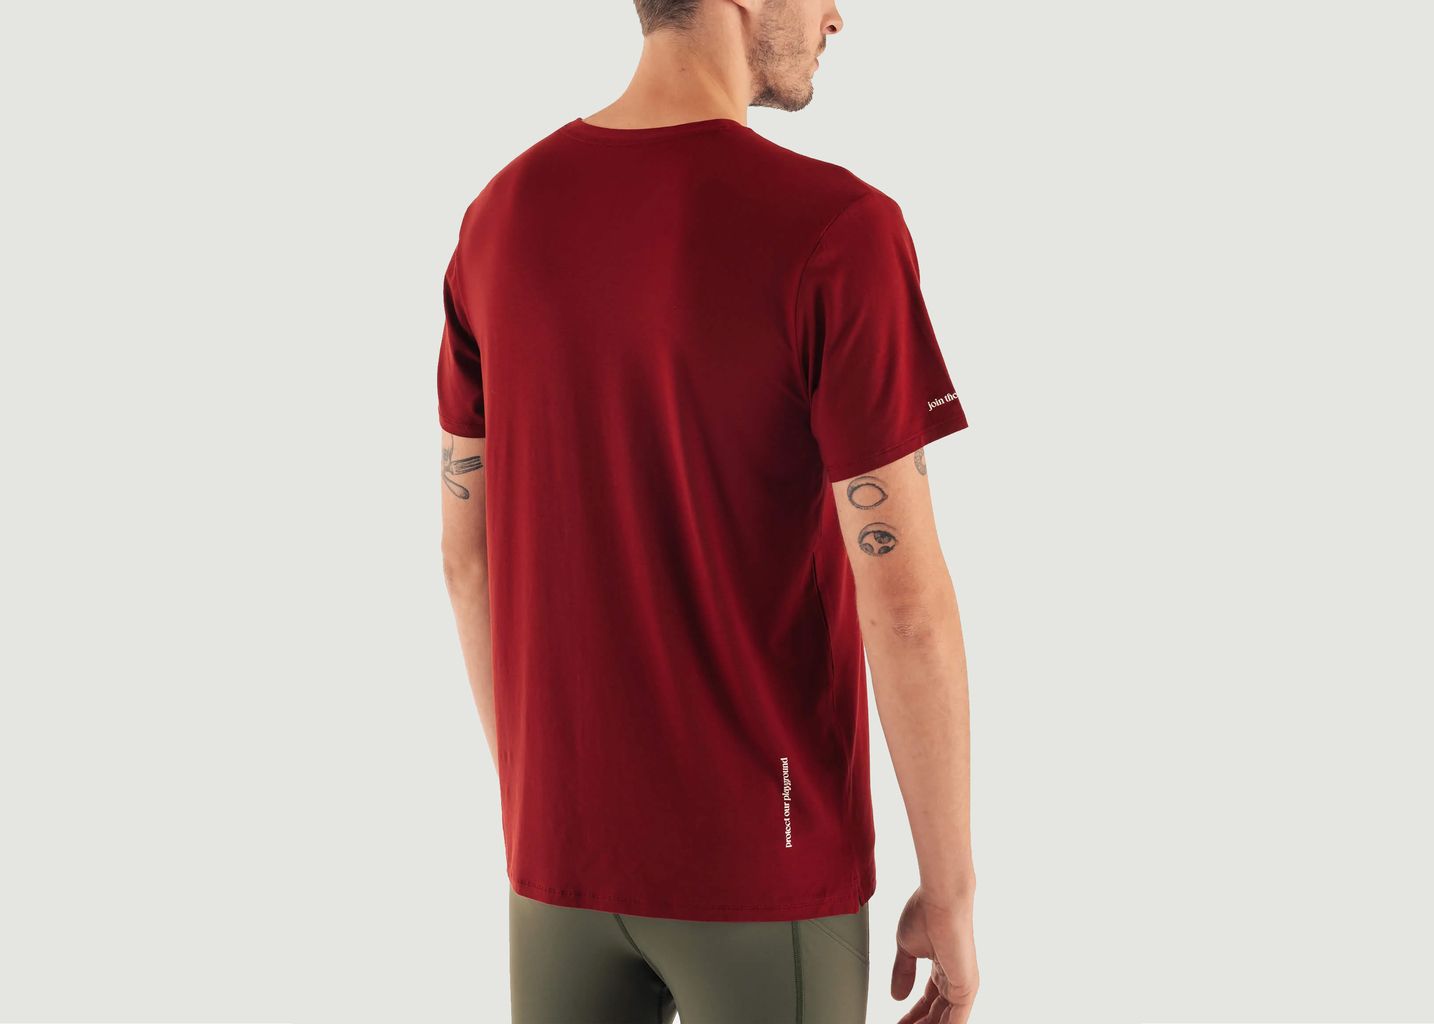 Teeshirt sport iconic - Circle Sportswear